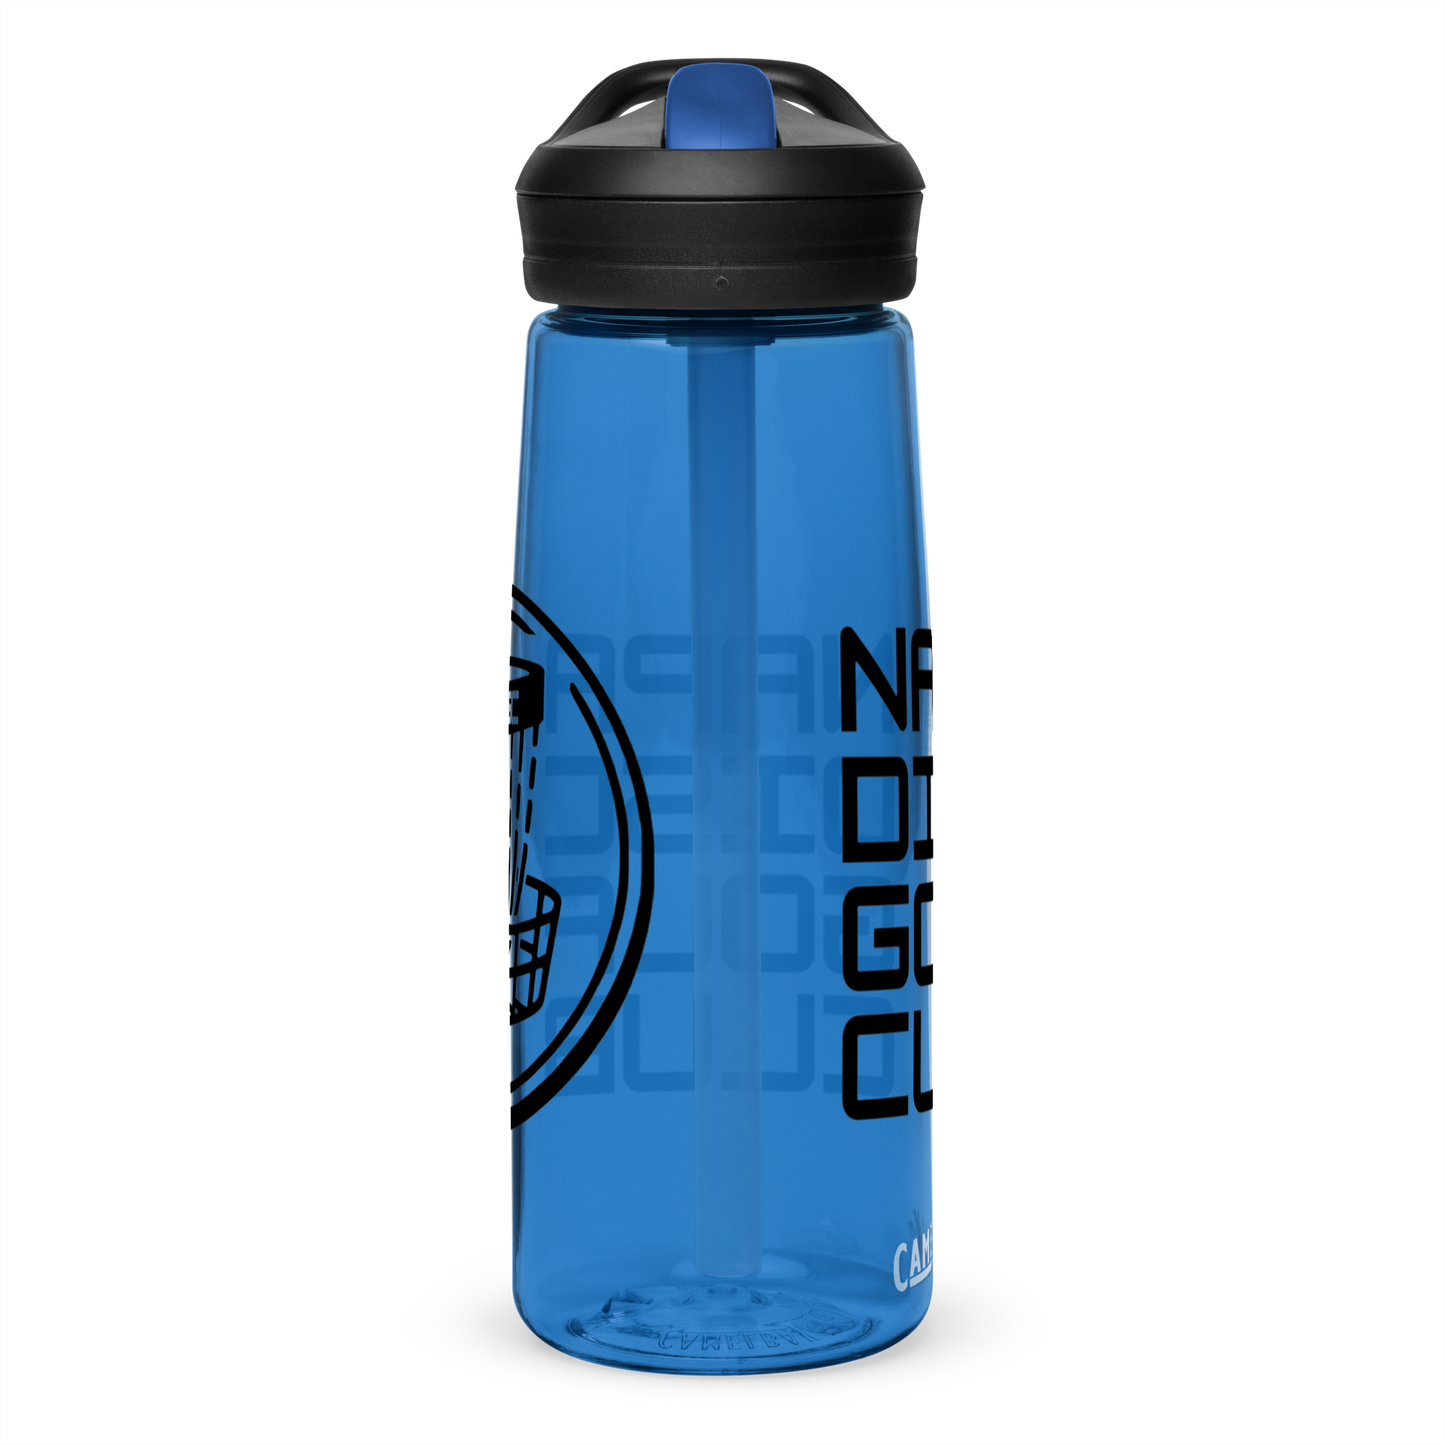 NDGC Camelbak Water Bottle